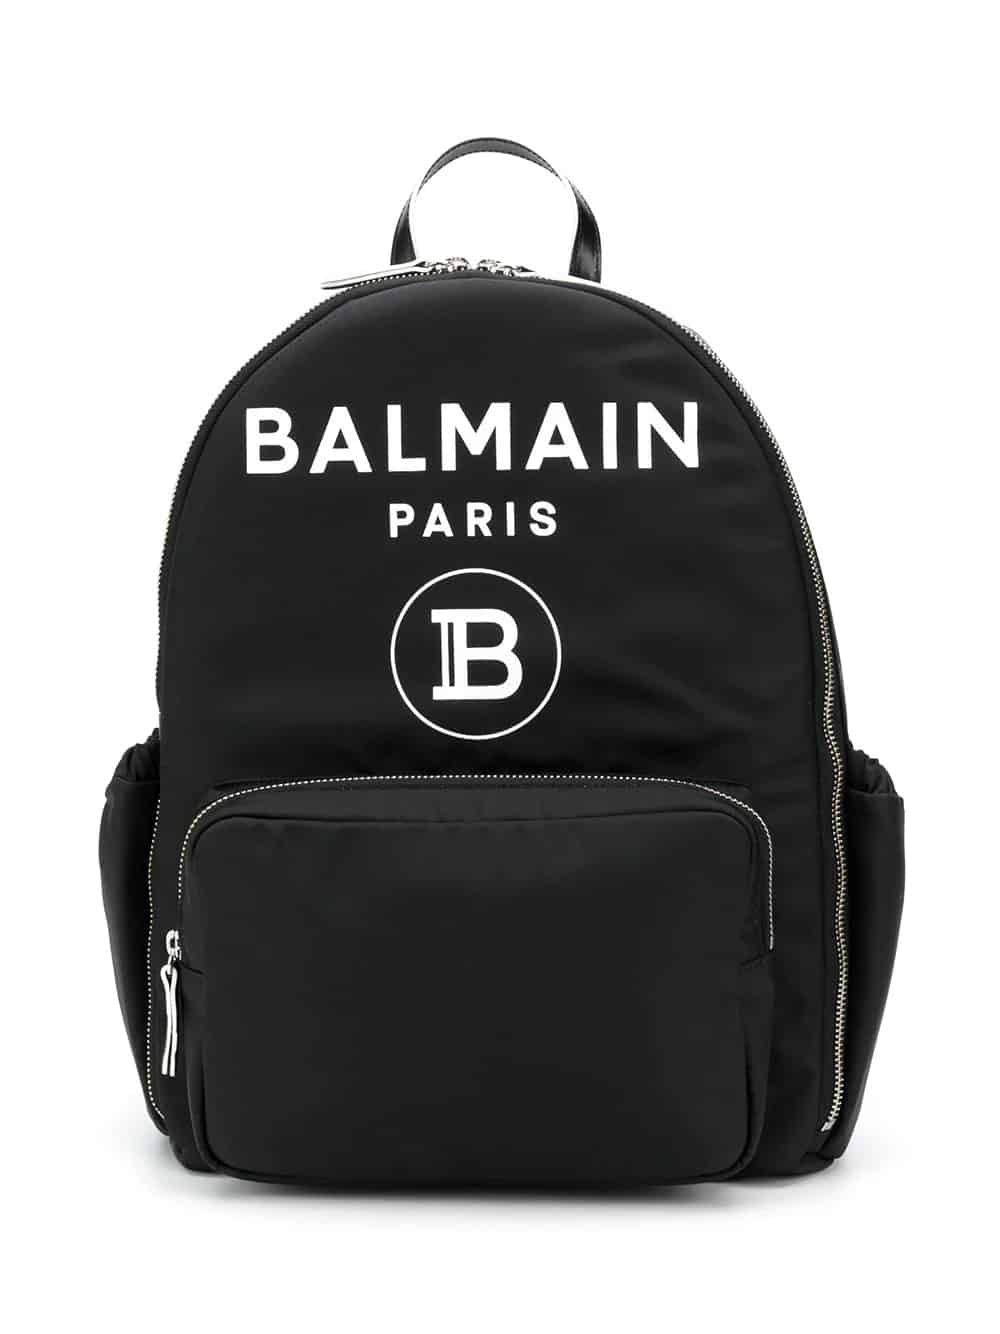 Balmain Logo Print Backpack